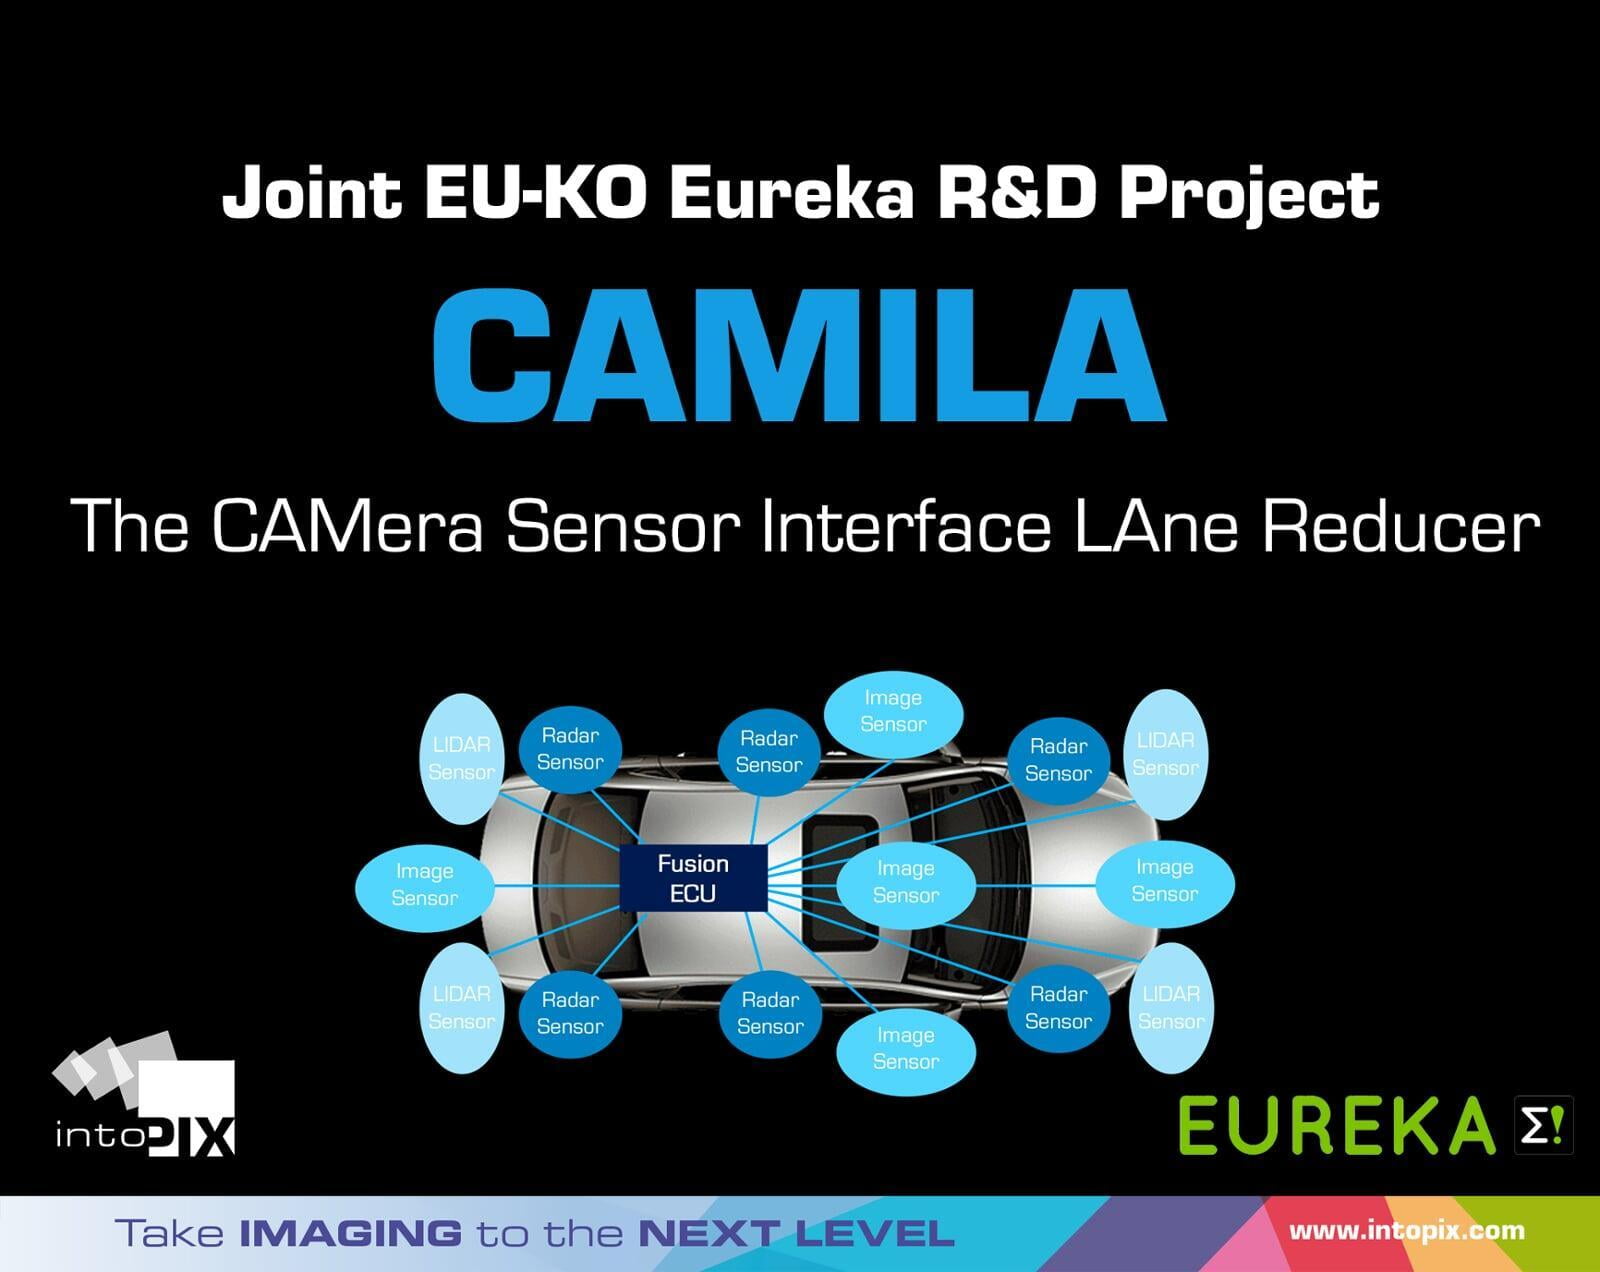 intoPIXは、新しい研究プロジェクトCAMILA（CAMera Sensor Interface LAne Reducer）を主導しています。